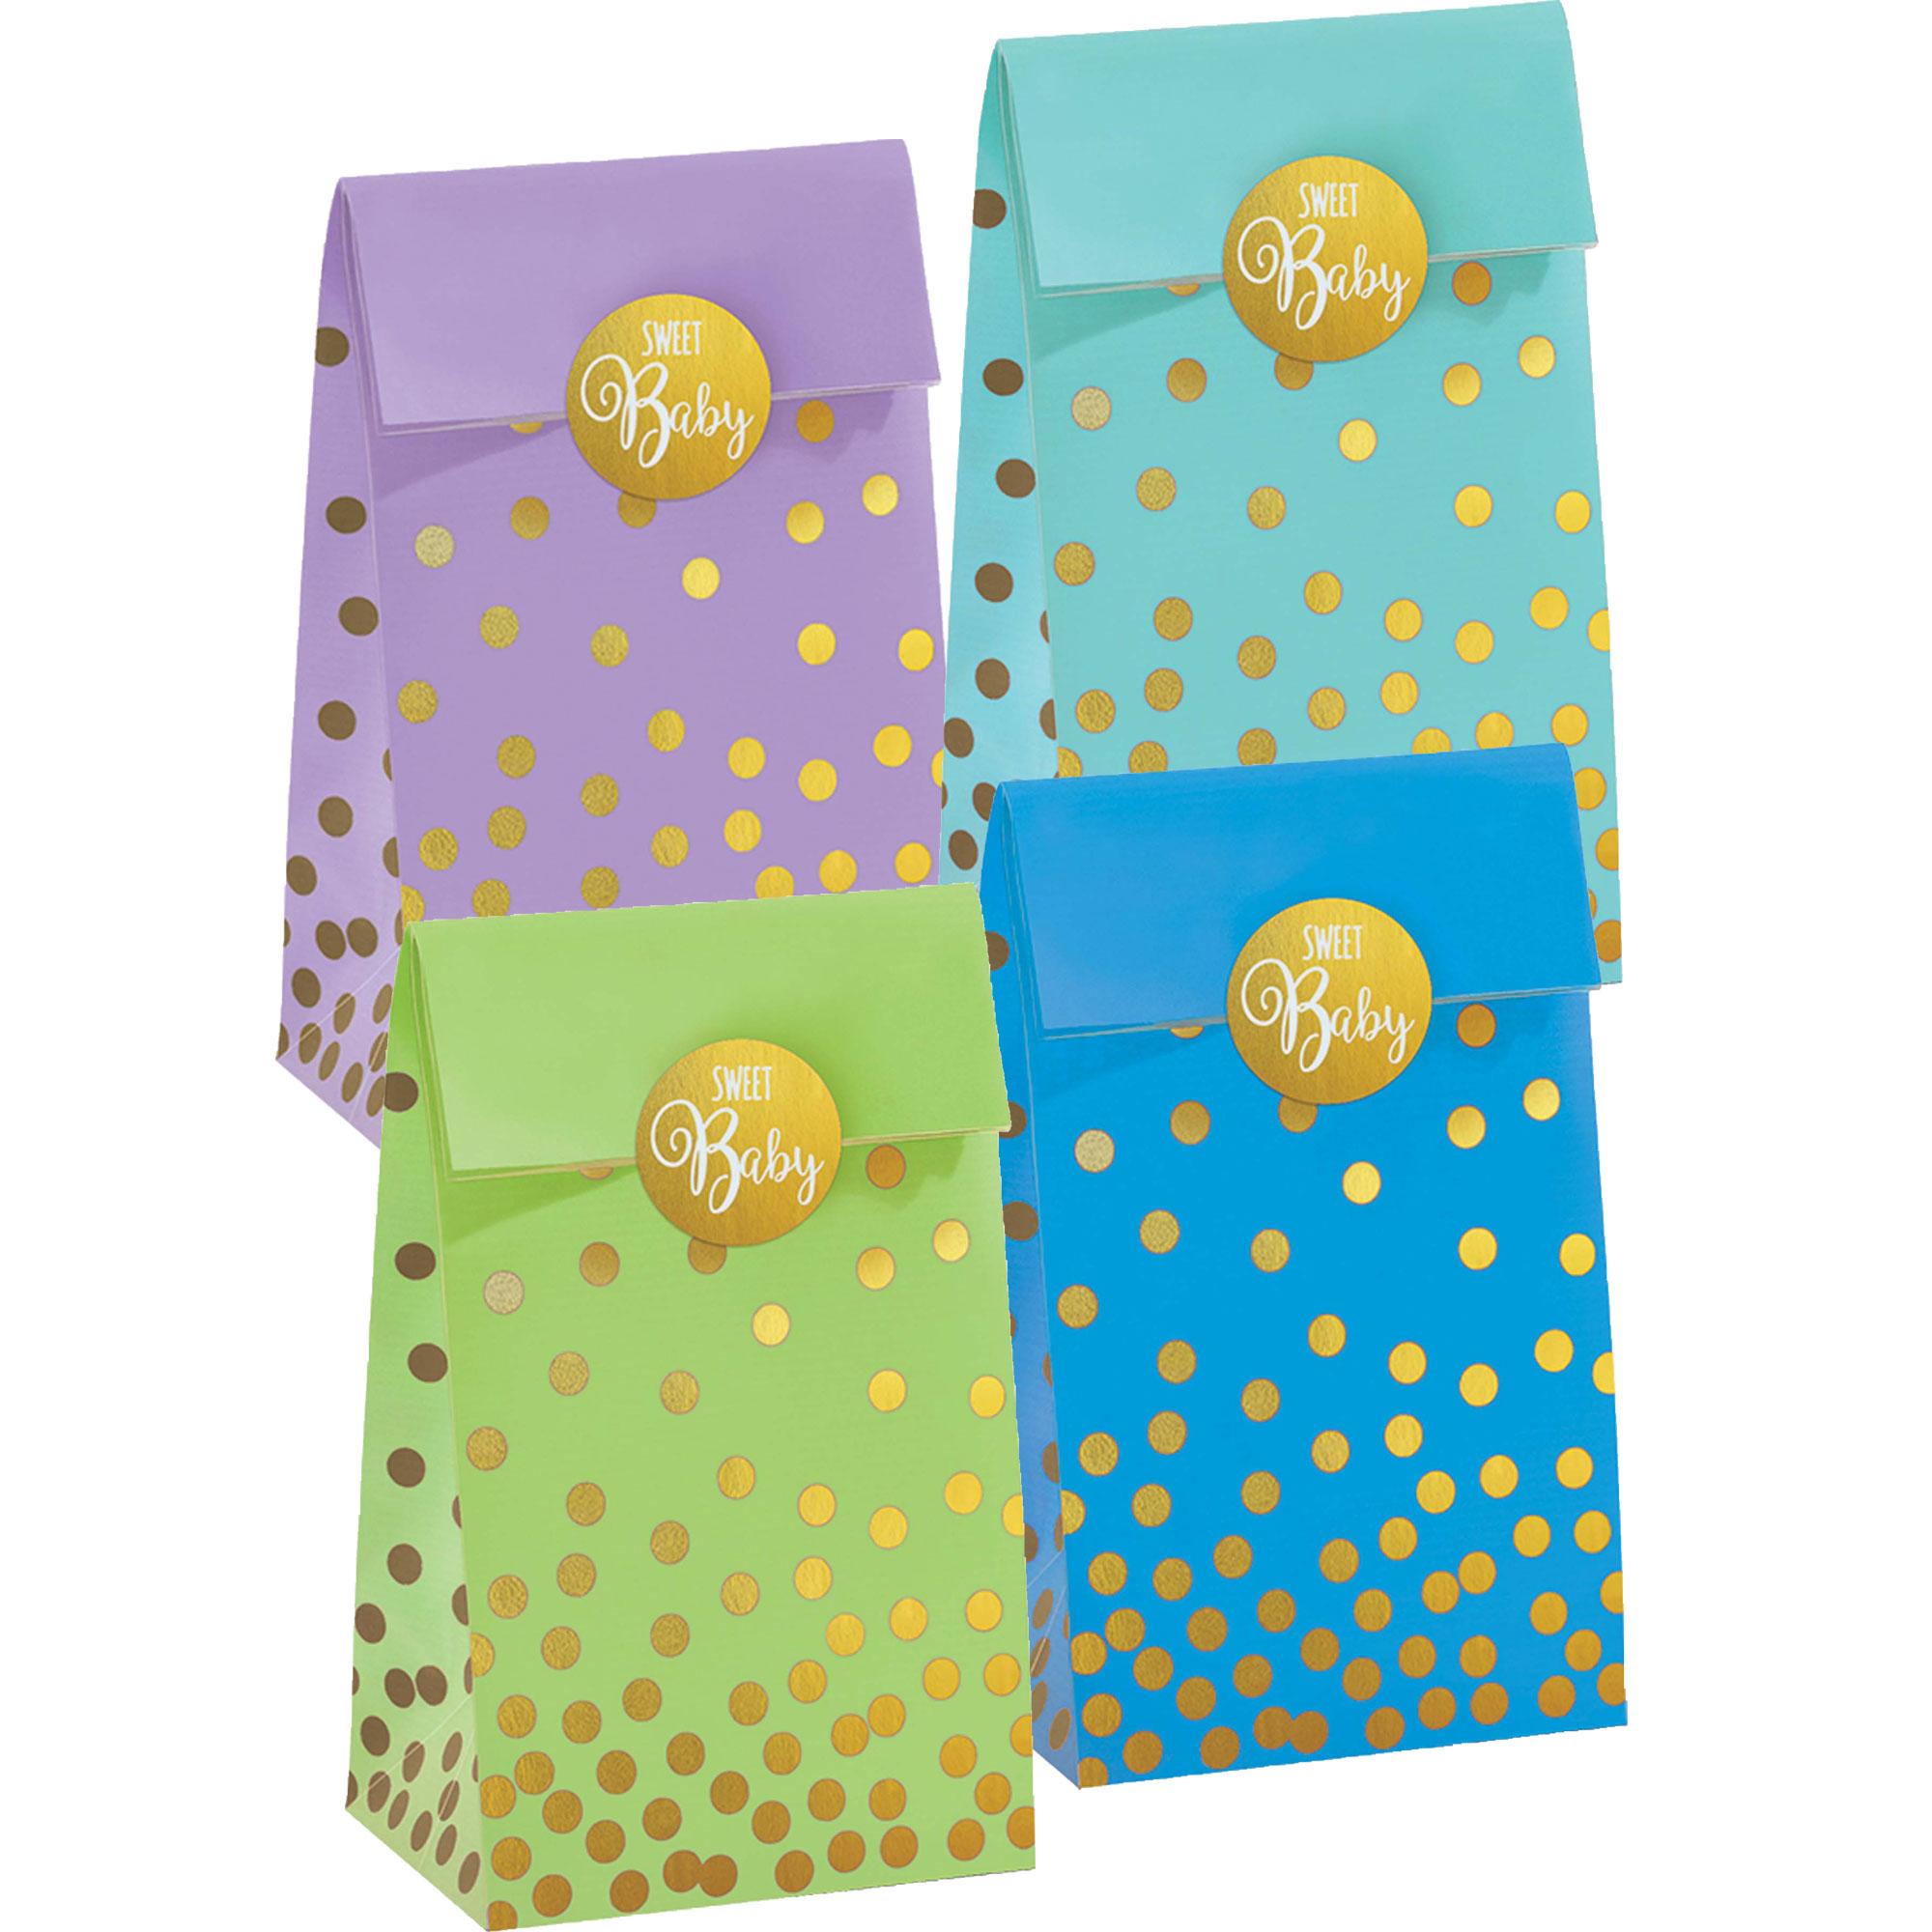 Neutral Baby Shower Foil Stamped Paper Bags 20pcs Party Favors - Party Centre - Party Centre